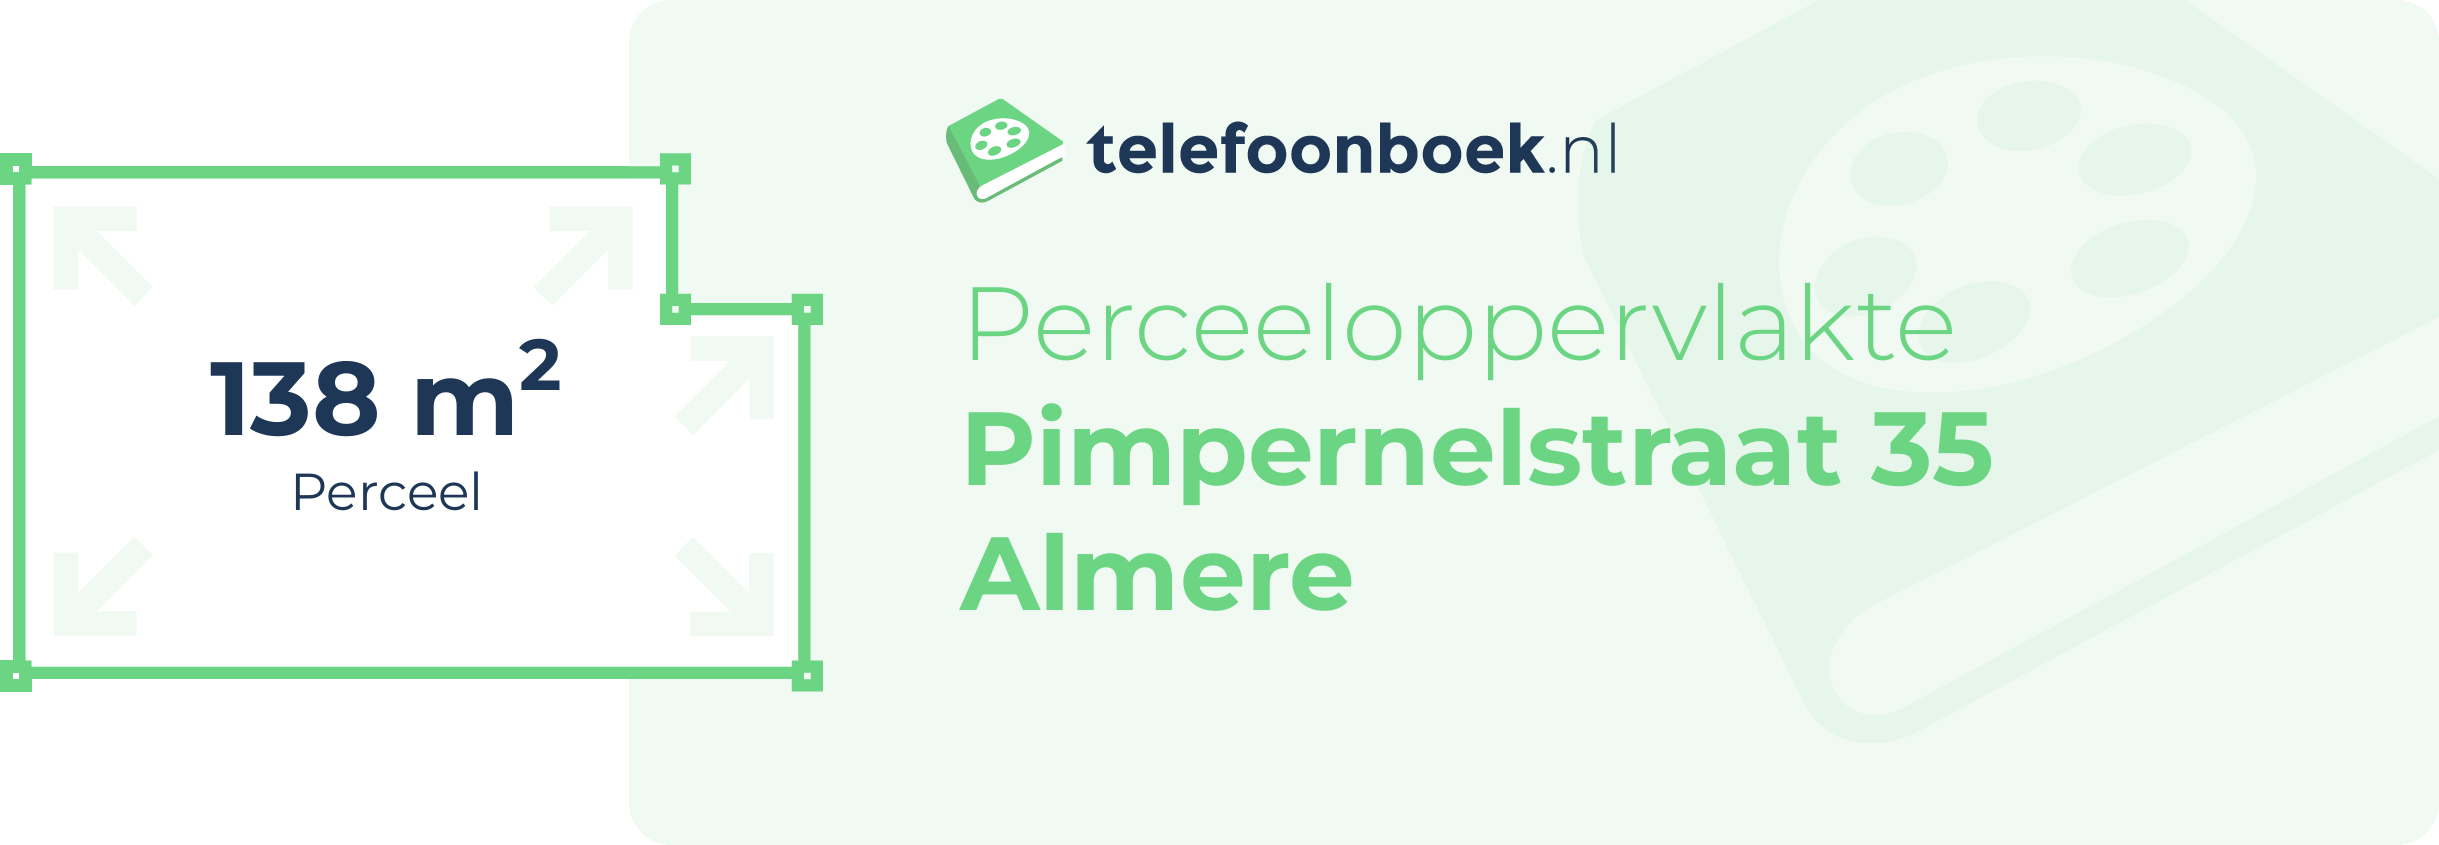 Perceeloppervlakte Pimpernelstraat 35 Almere